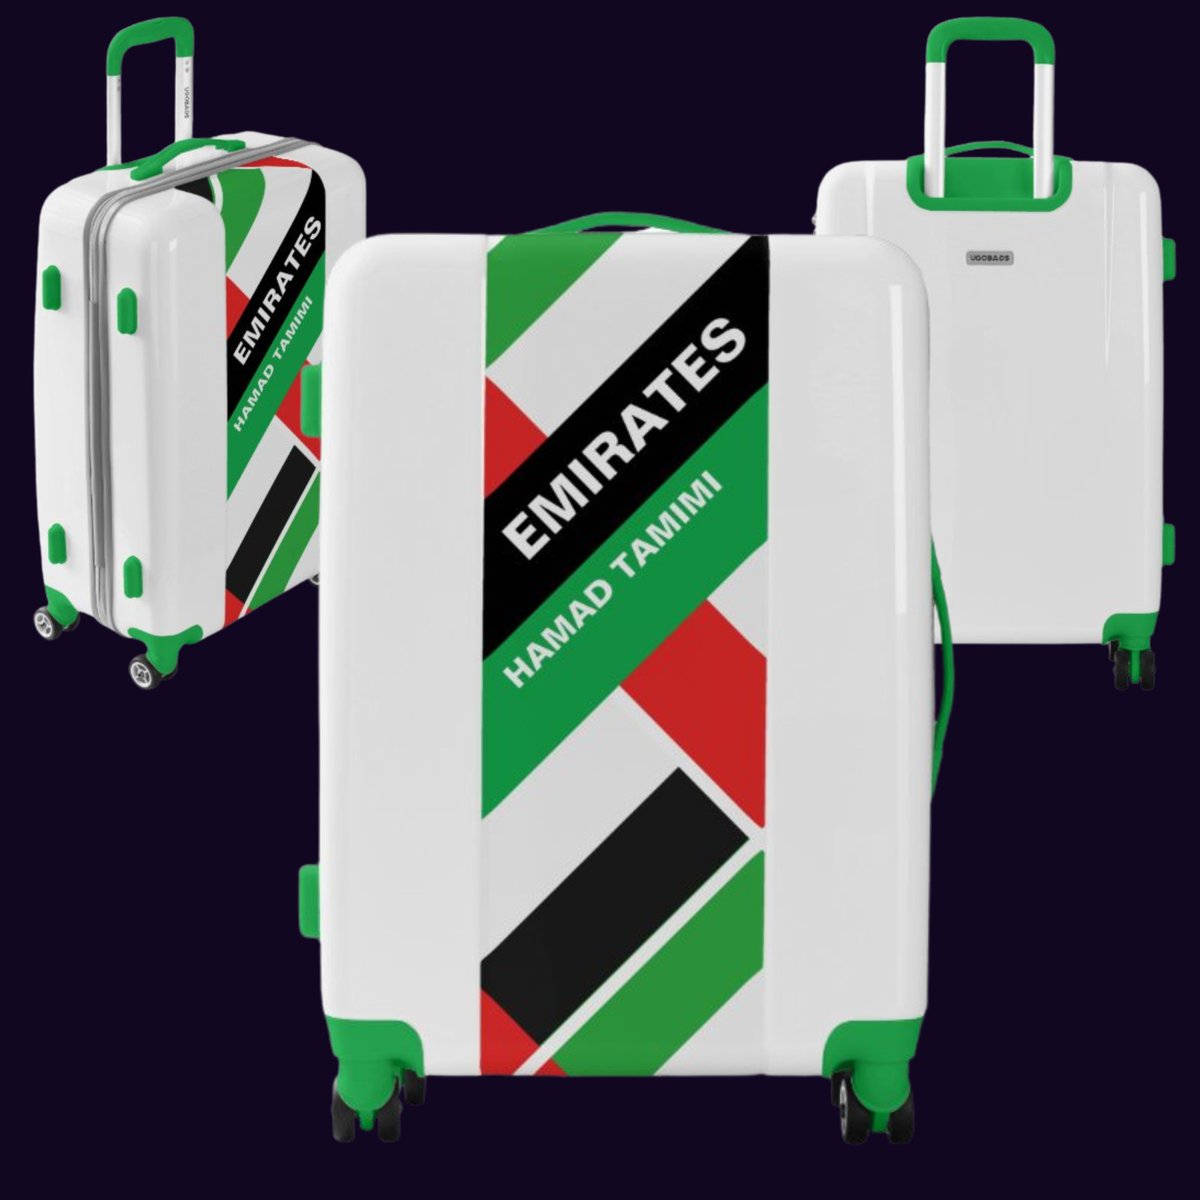 Personalized Patriotic United Arab Emirates Flag Luggage zazzle.com/z/a0405p6o?rf=… via @zazzle #EmiratesFACup #Emirates #UAETeamEmirates #uaevwi #uaenews #uaeinfinint #uaeu #UAE #FlagDay #flag #Emirati #Accessories